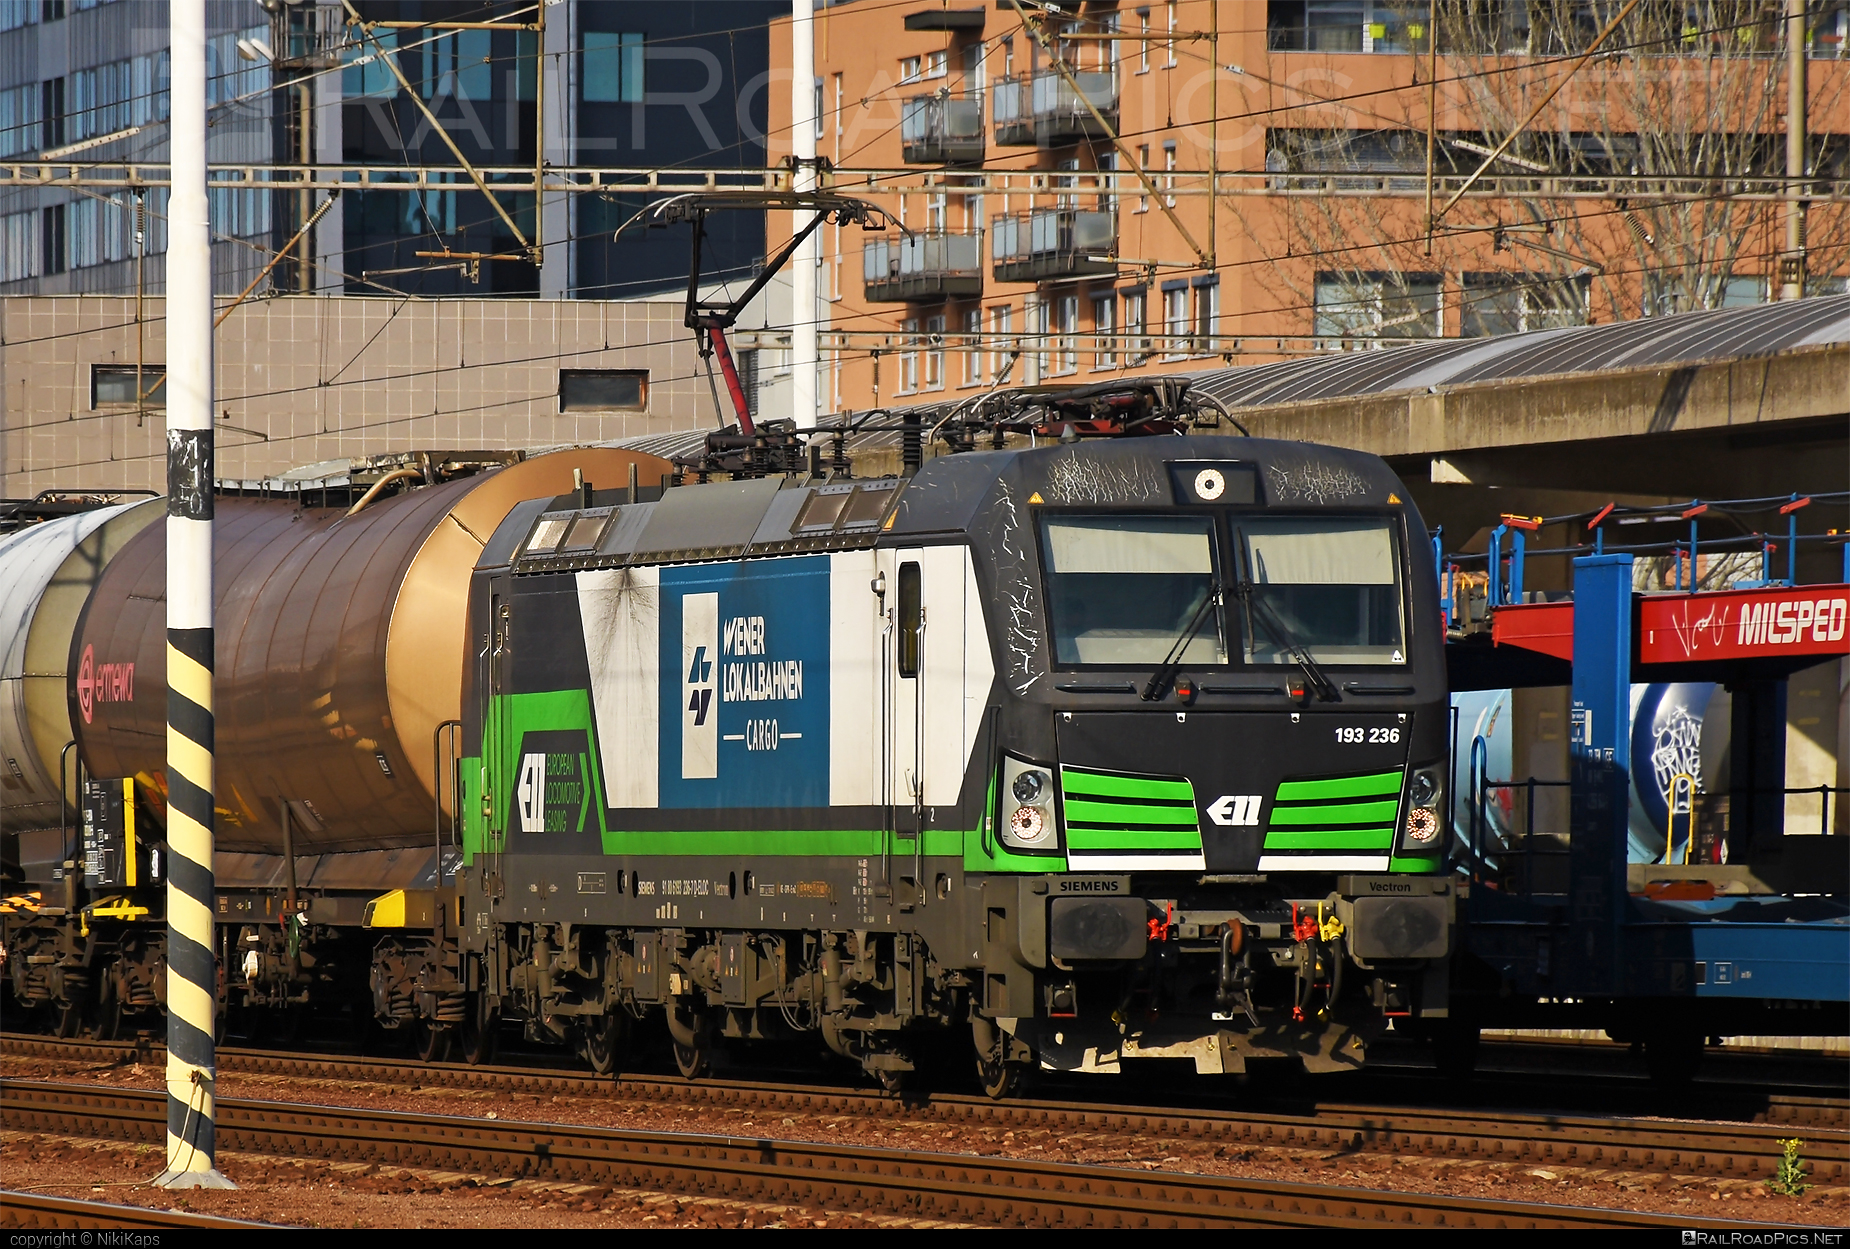 Siemens Vectron AC - 193 236 operated by Wiener Lokalbahnen Cargo GmbH #ell #ellgermany #eloc #ermewa #europeanlocomotiveleasing #kesselwagen #siemens #siemensVectron #siemensVectronAC #tankwagon #vectron #vectronAC #wienerlokalbahnencargo #wienerlokalbahnencargogmbh #wlc